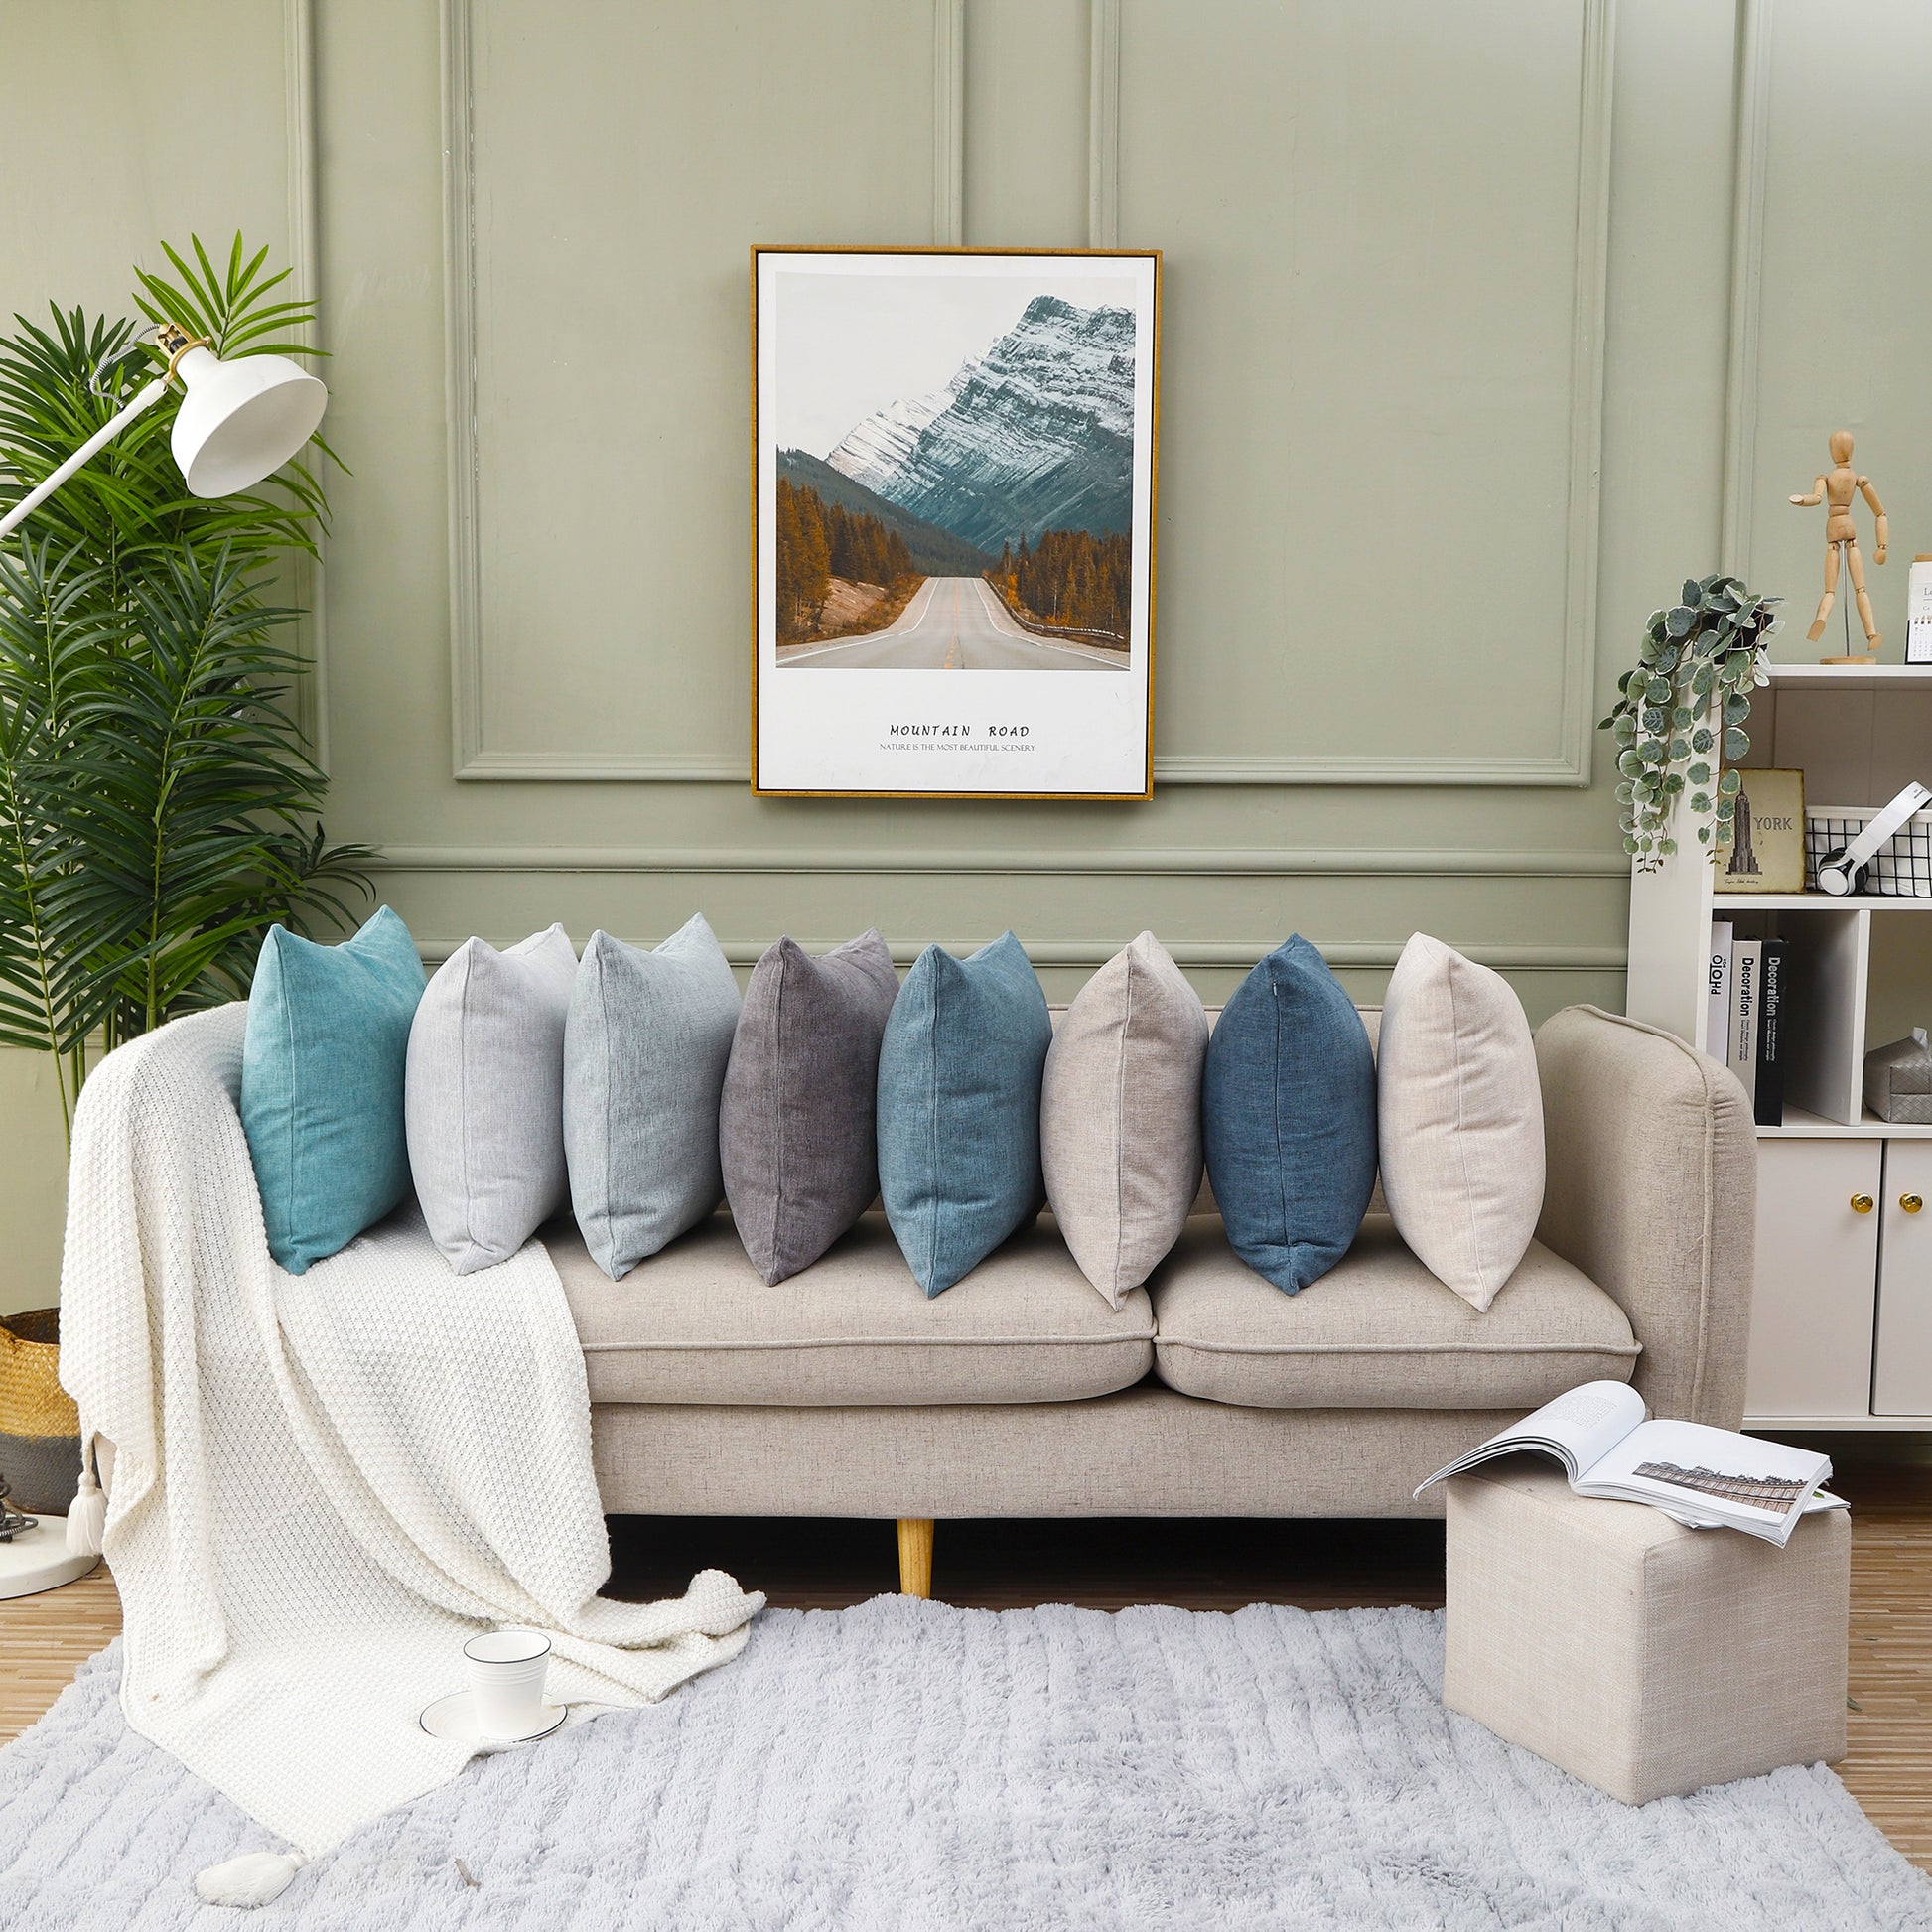 Throw Pillow Covers Set of 2 Sofa Decor Velvet Cushion Cases 3